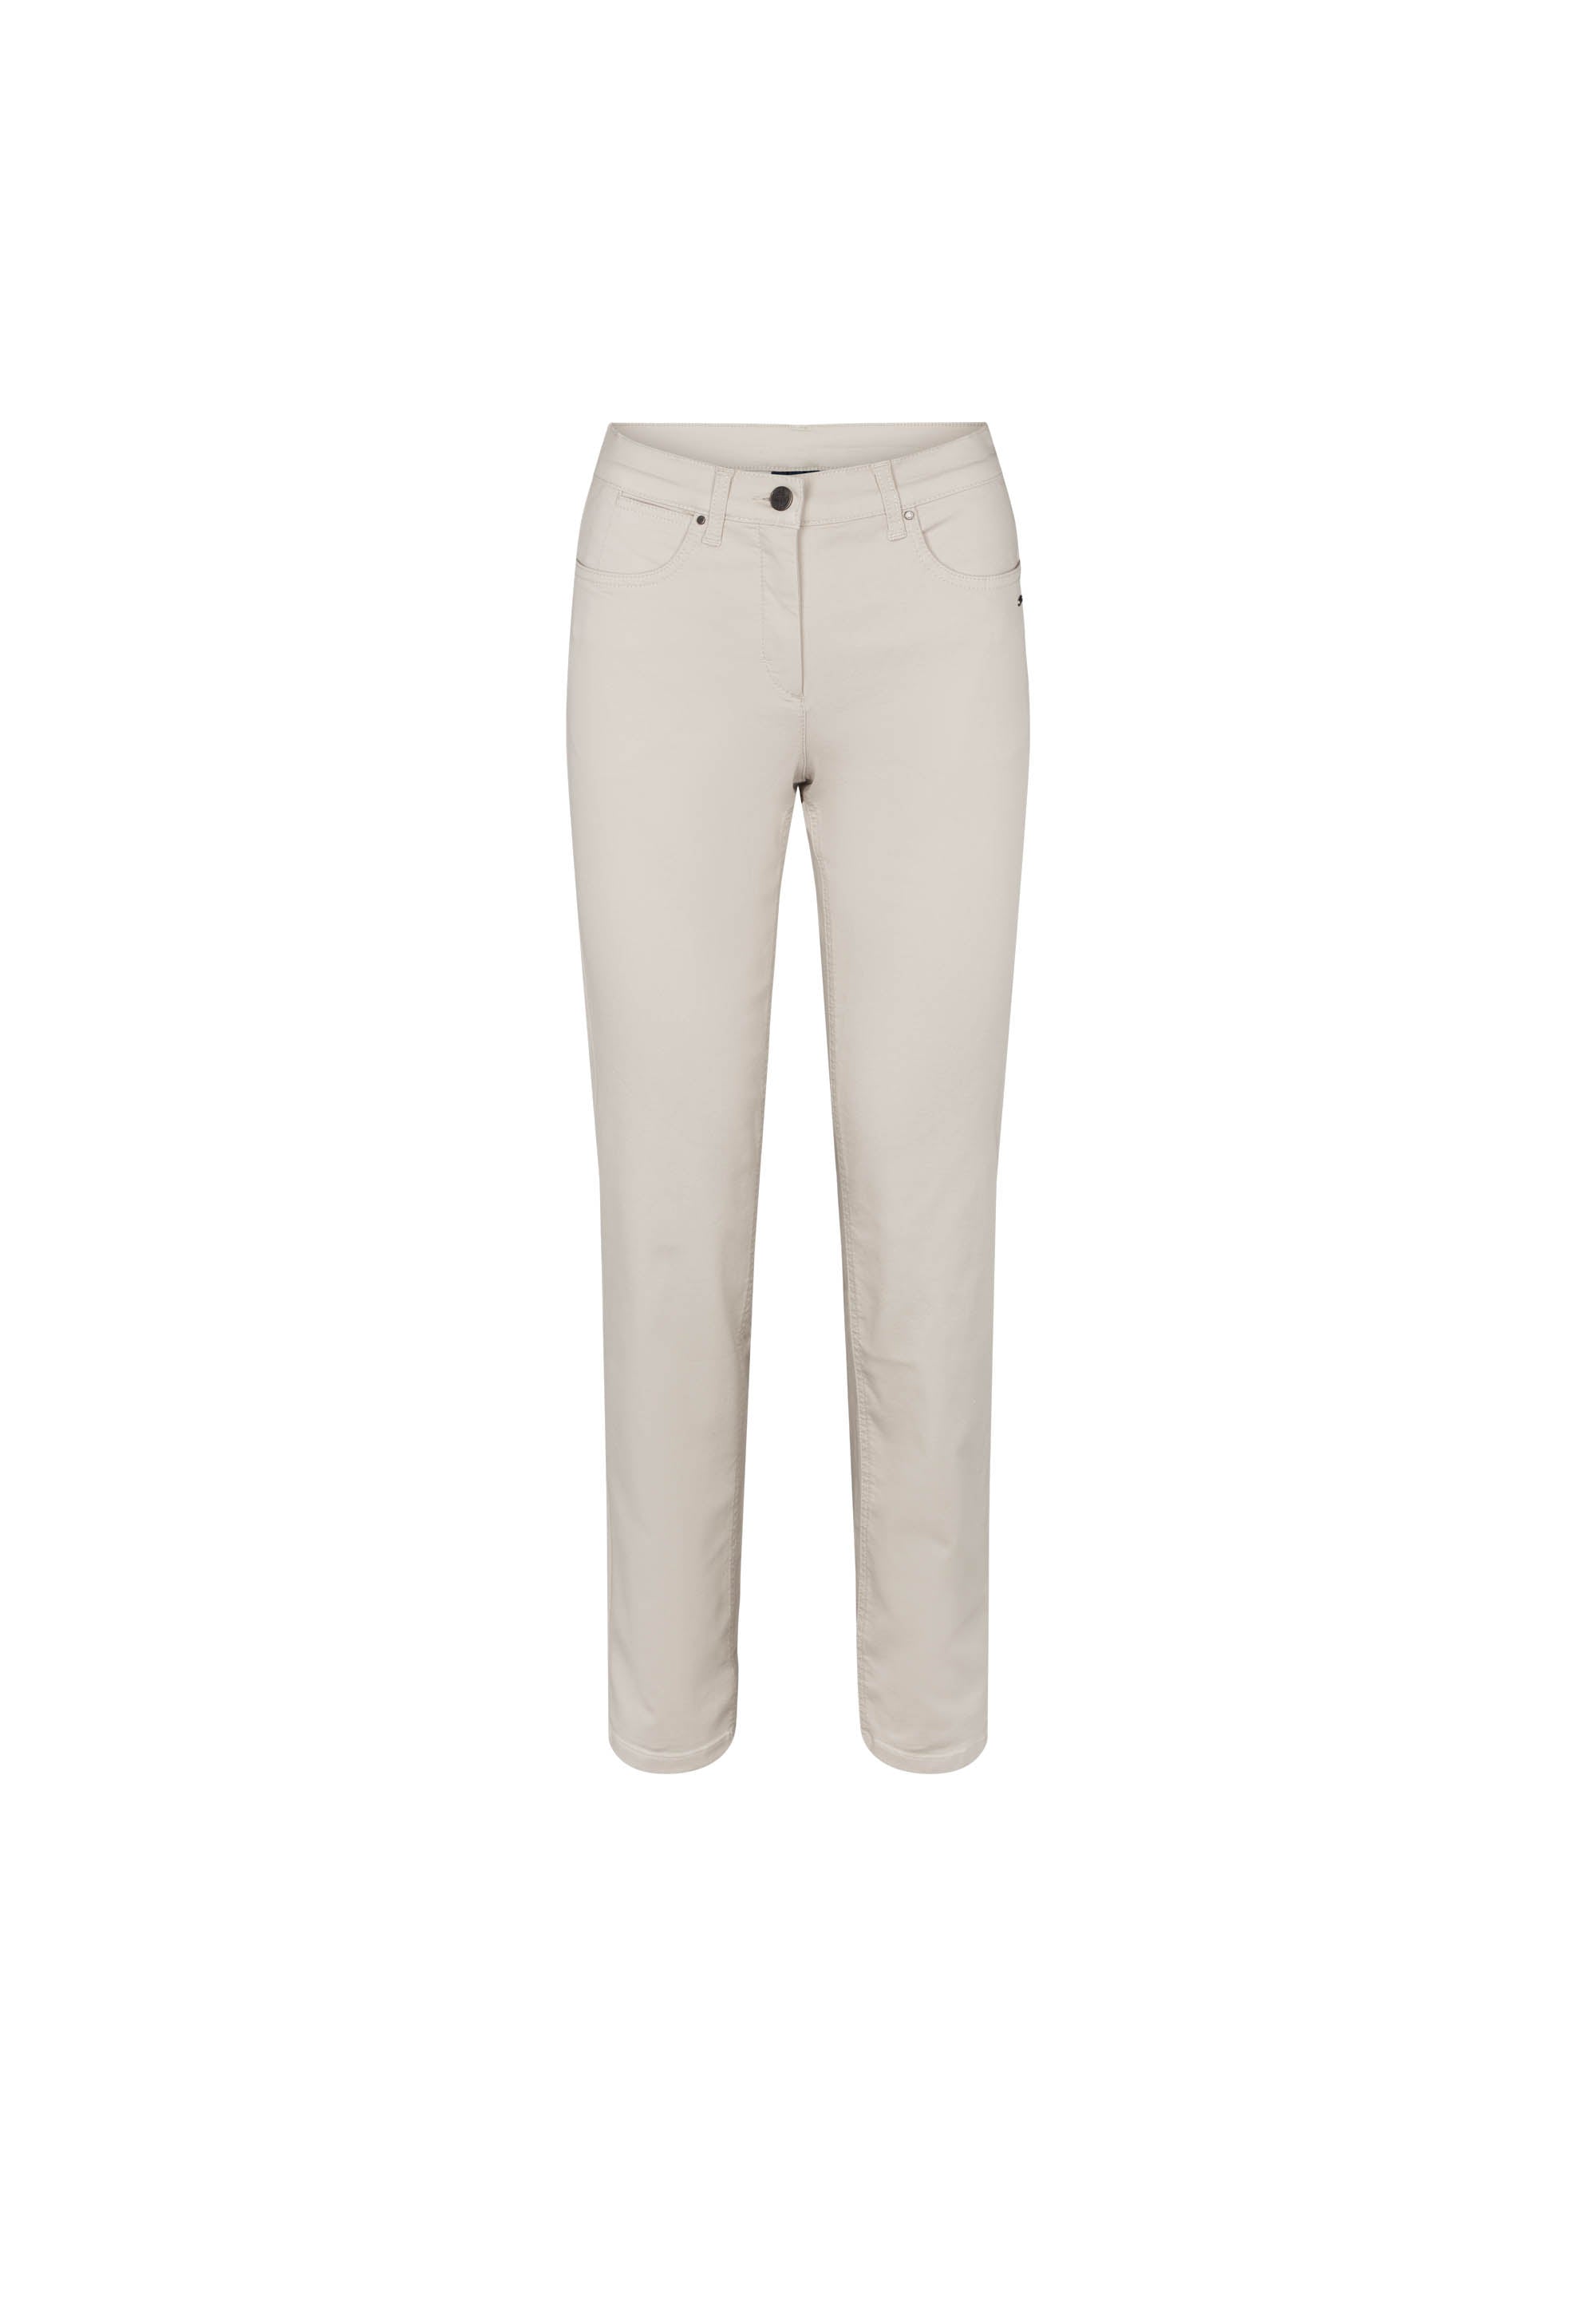 LAURIE Charlotte Regular - Short Length Trousers REGULAR Grau sand